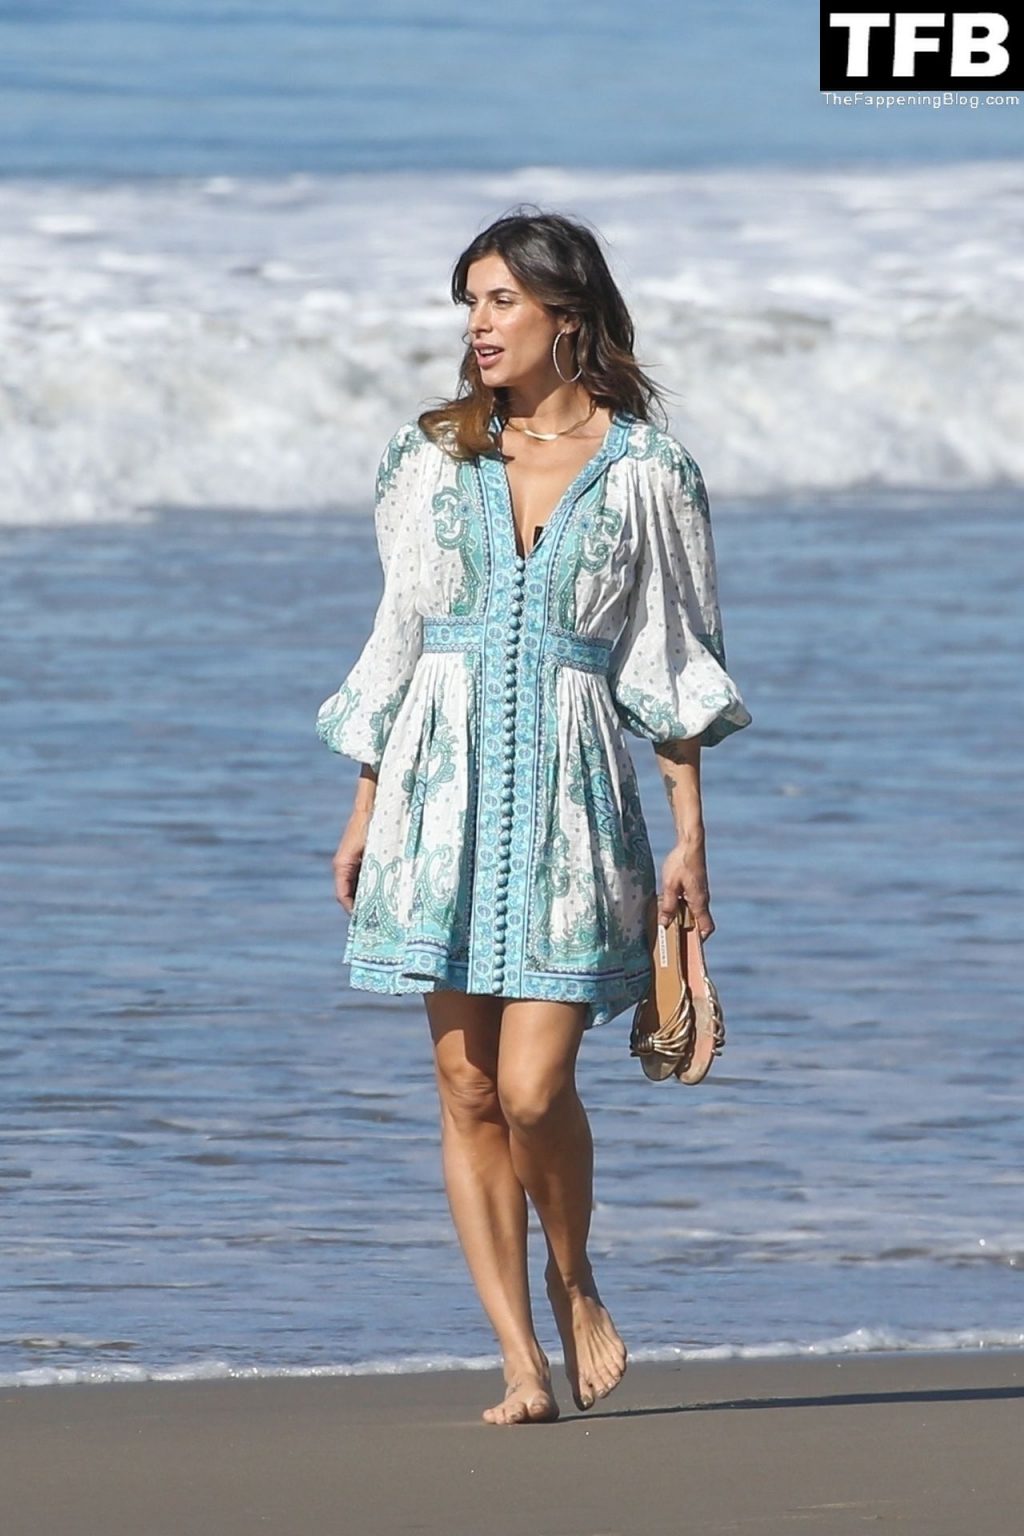 Elisabetta Canalis Undresses on the Beach During a Sexy Shoot in Santa Monica (66 Photos)